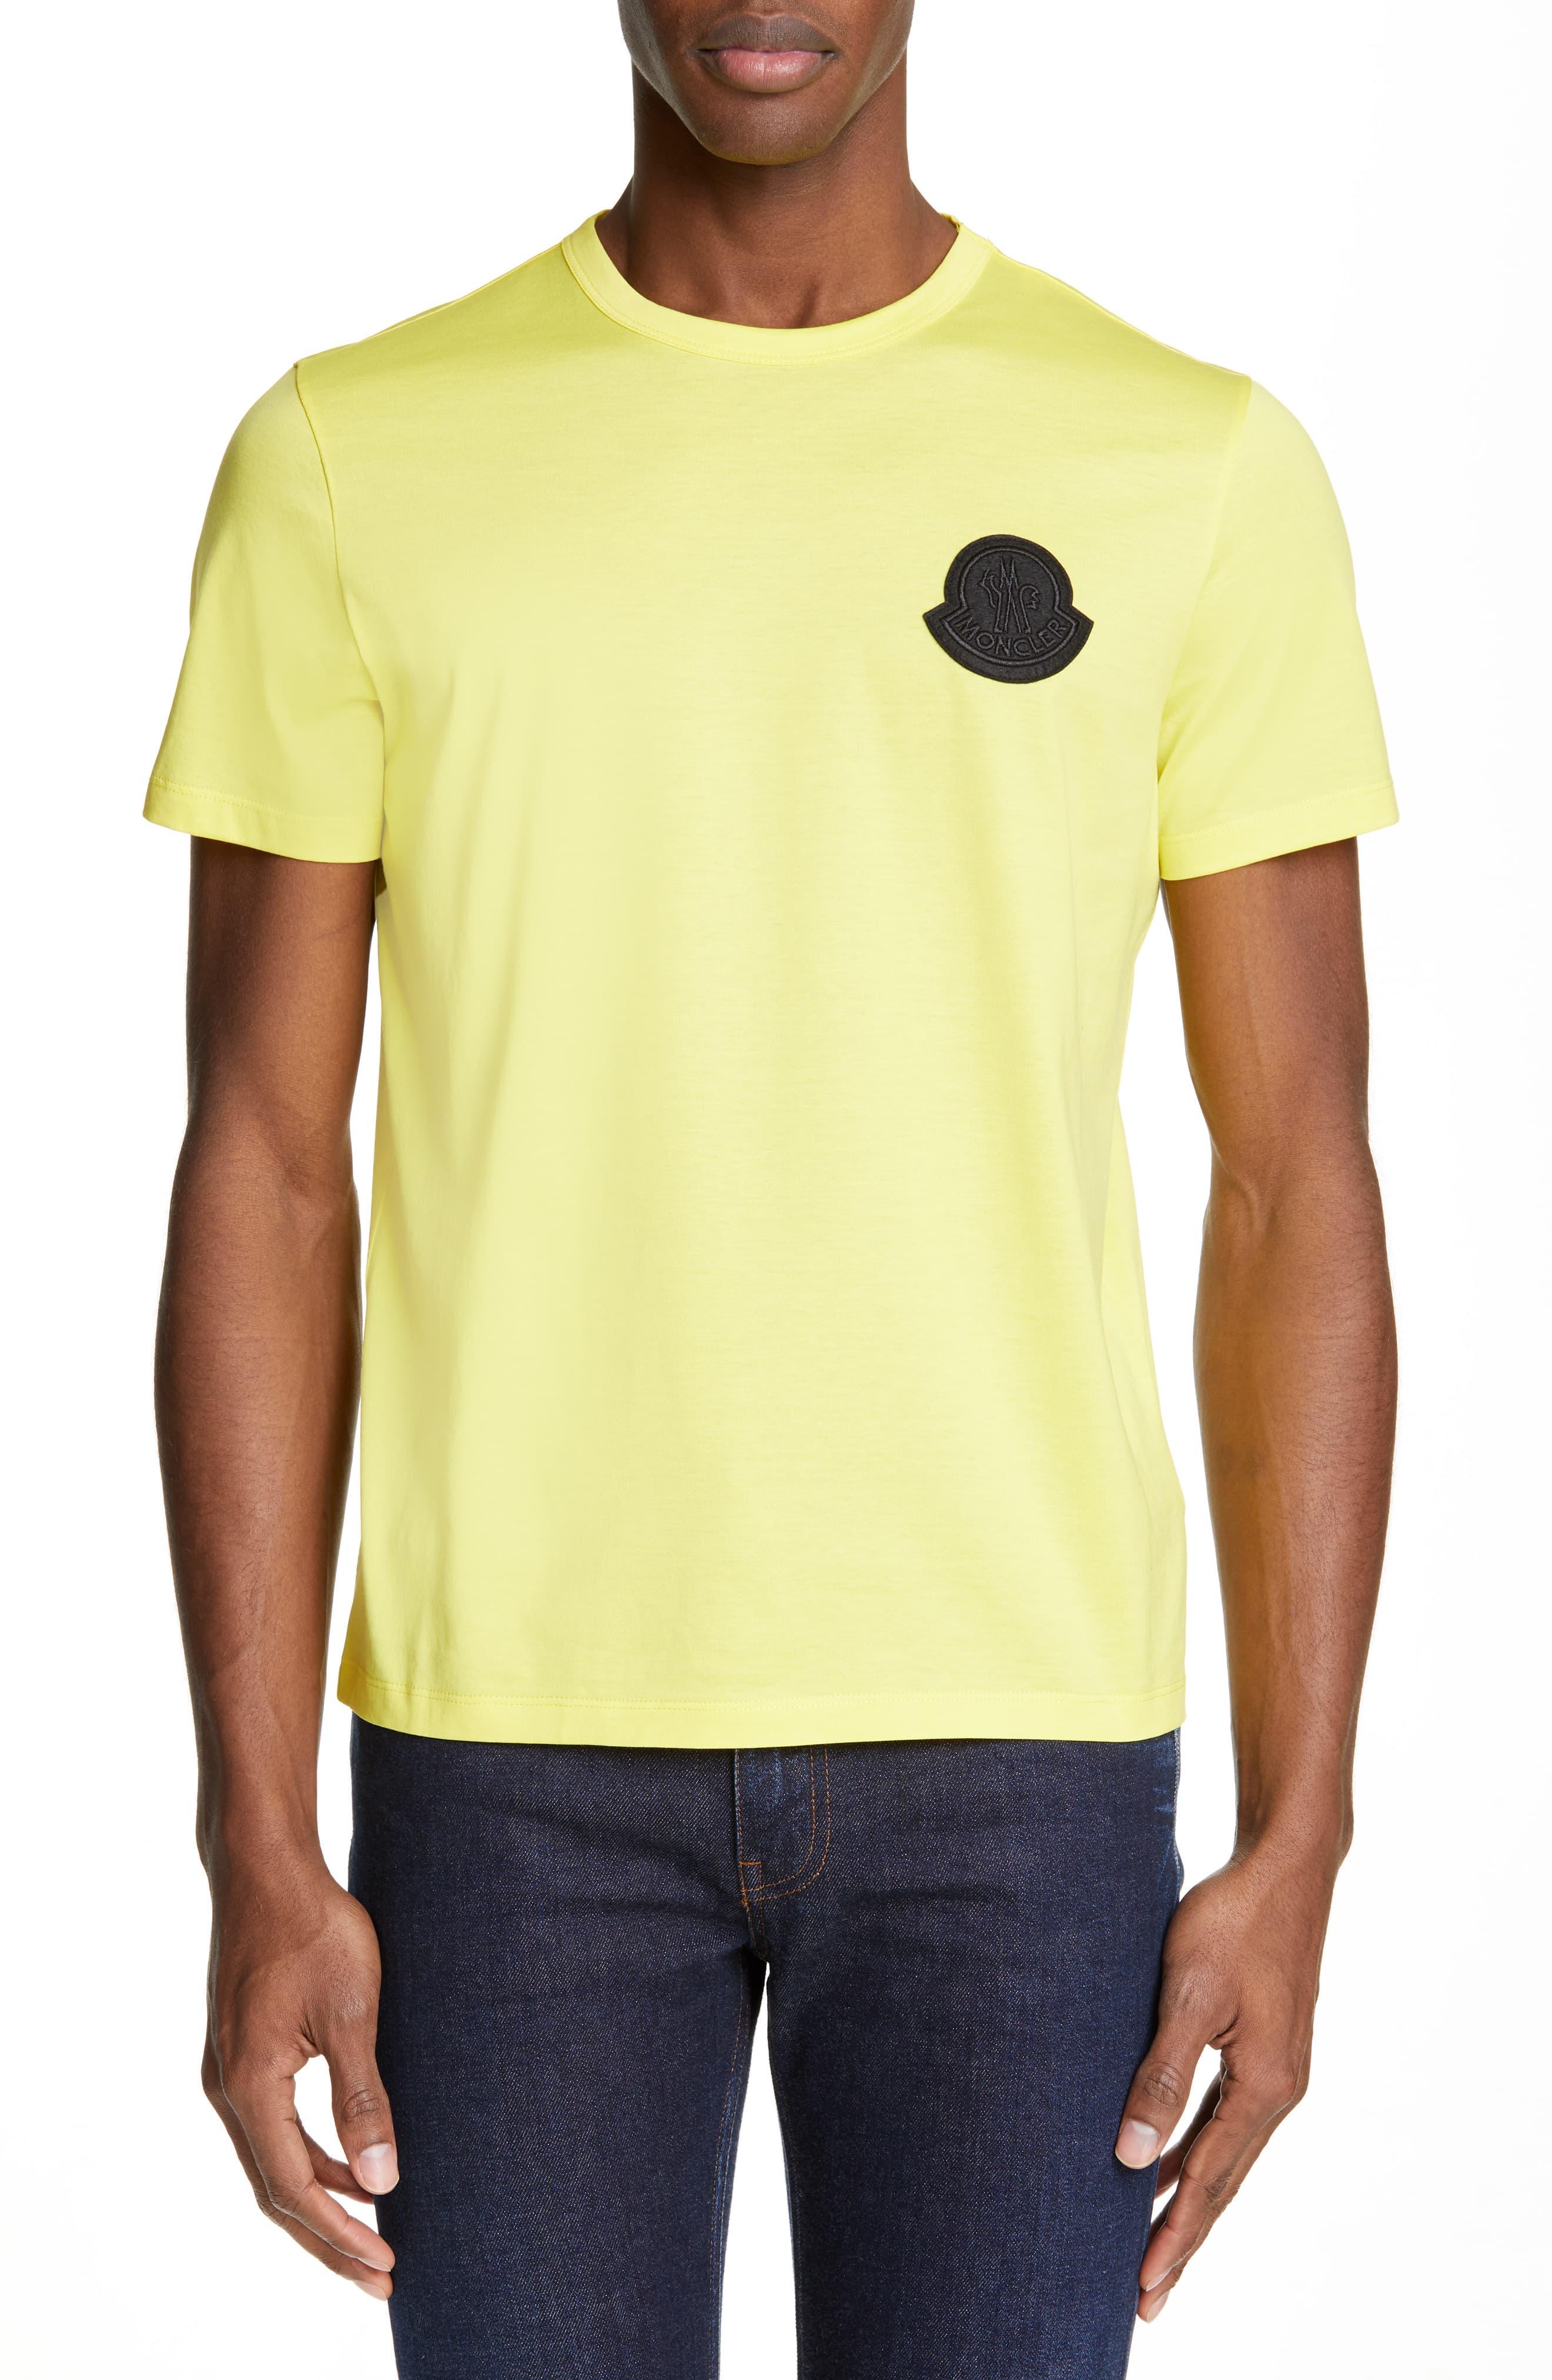 Moncler Genius Cotton Neon T-shirt in 